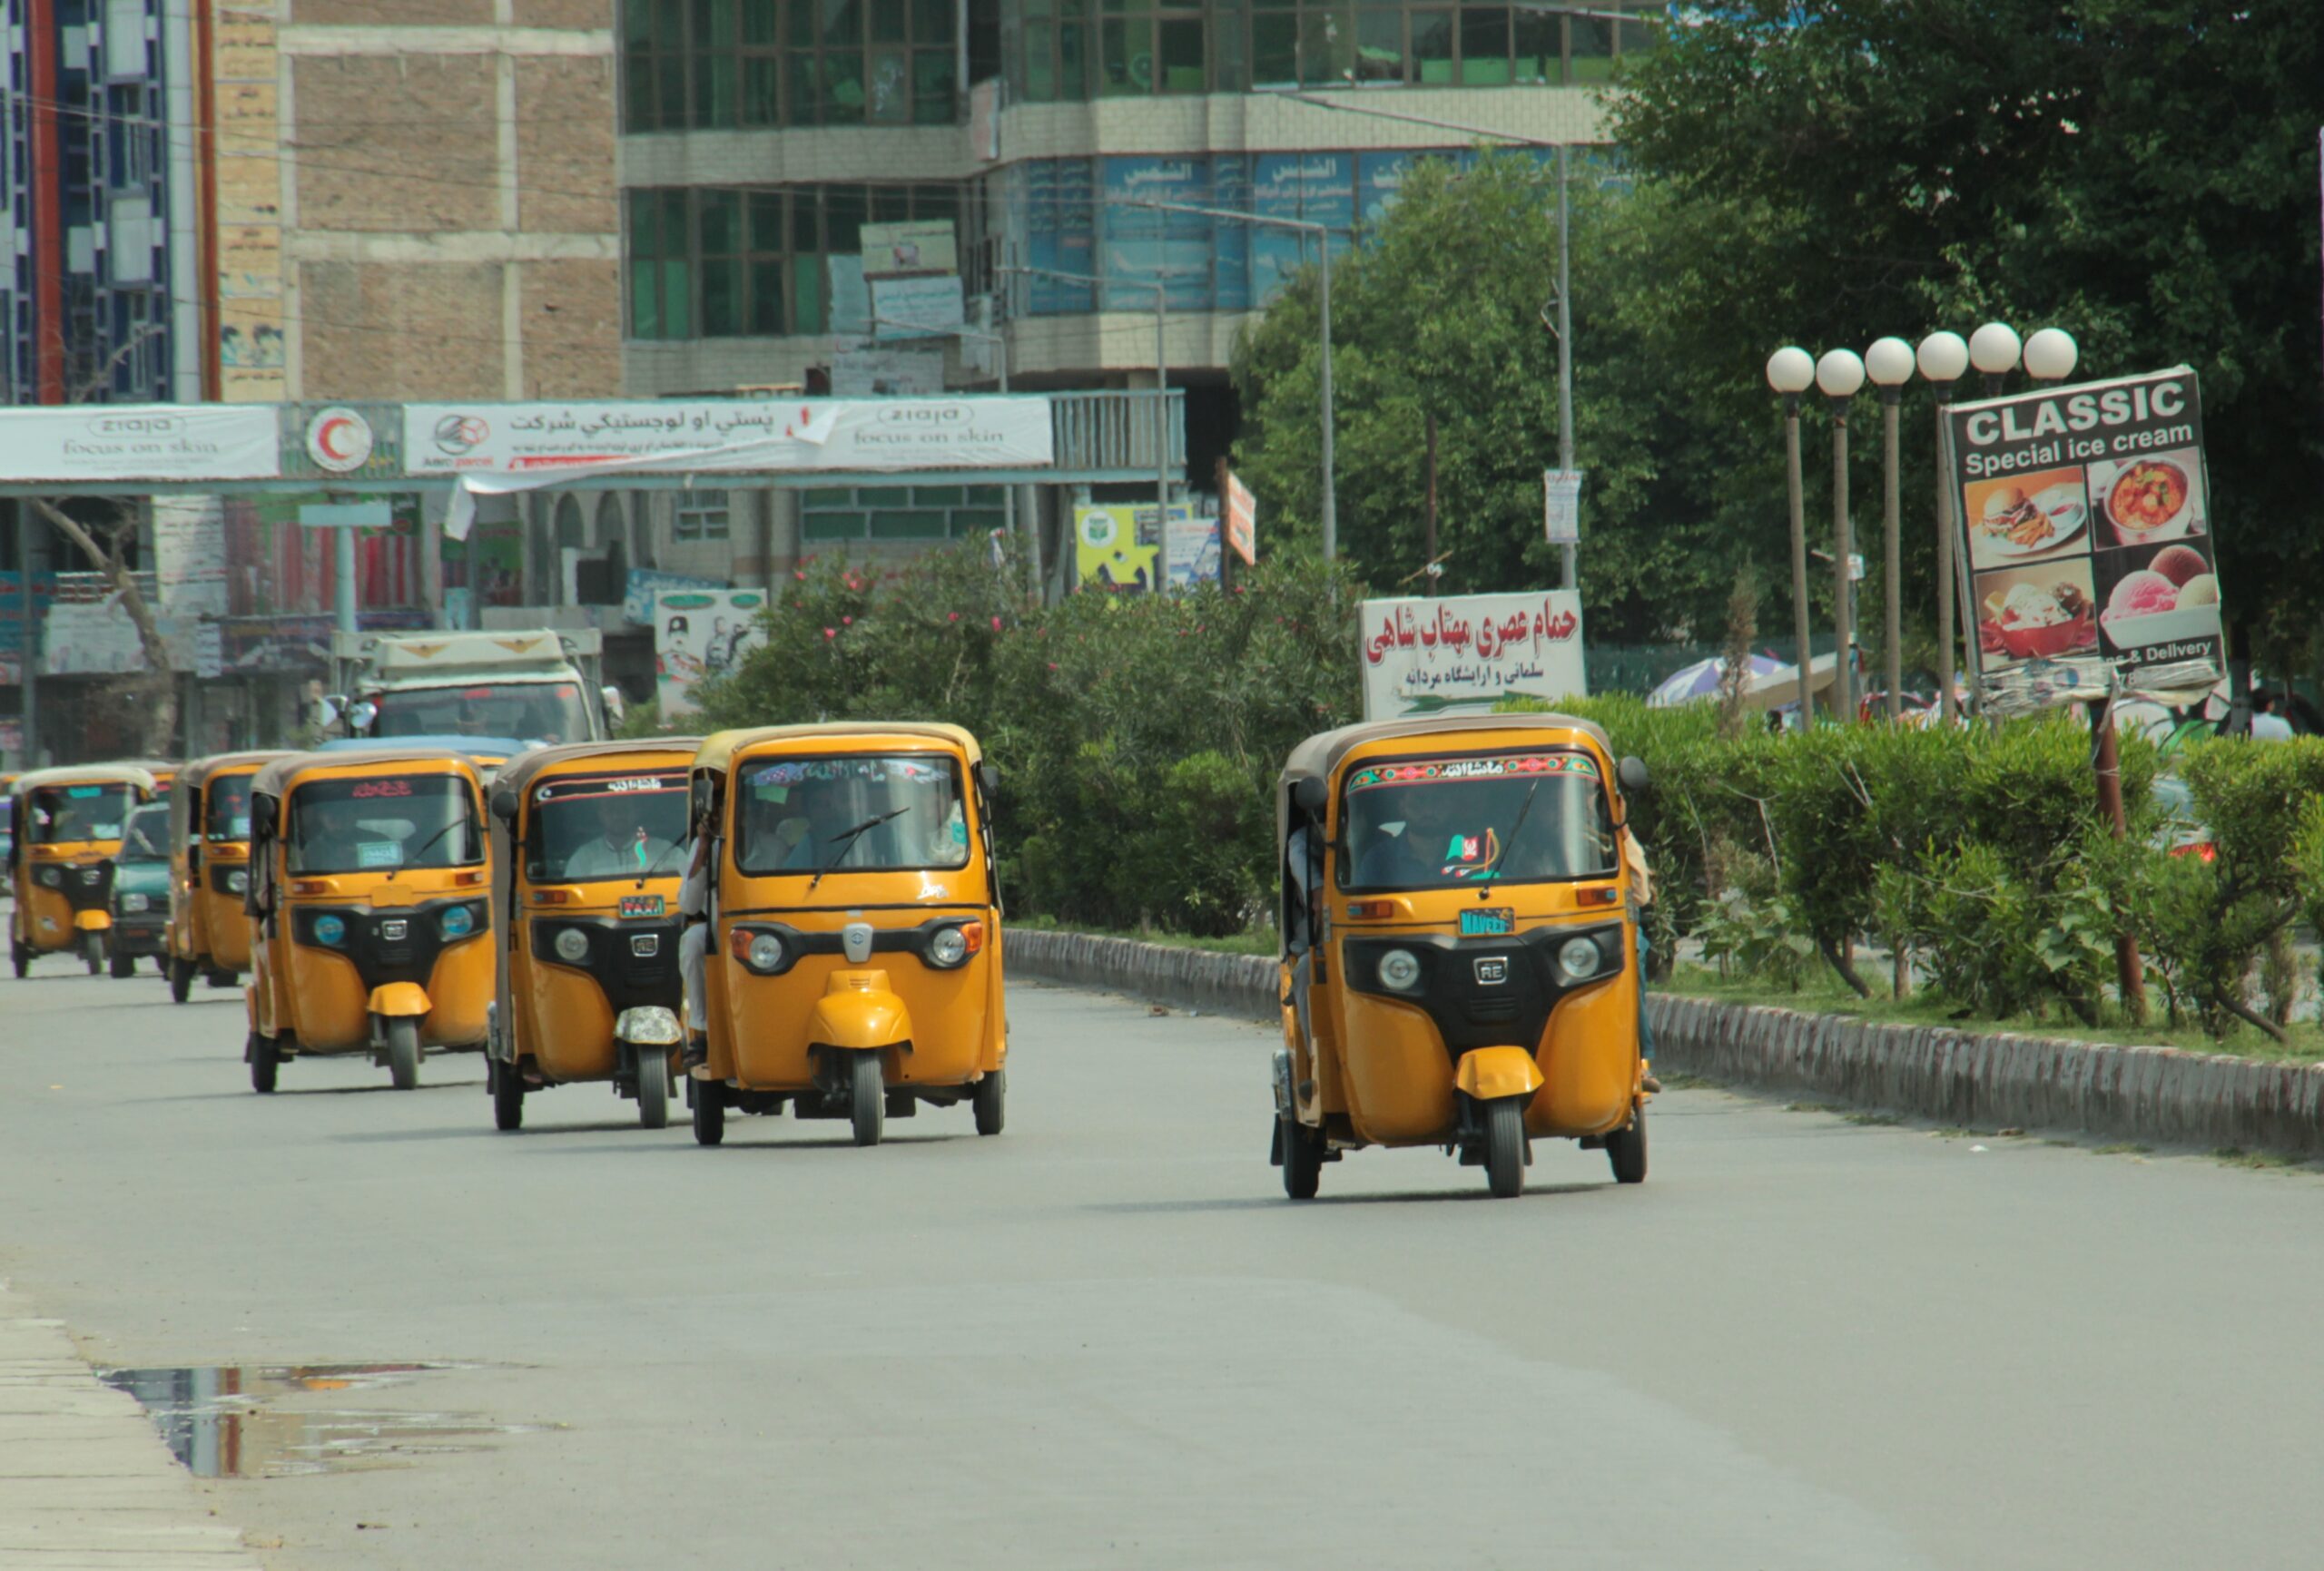 Photograph of small yellow rickshaws with three wheels.